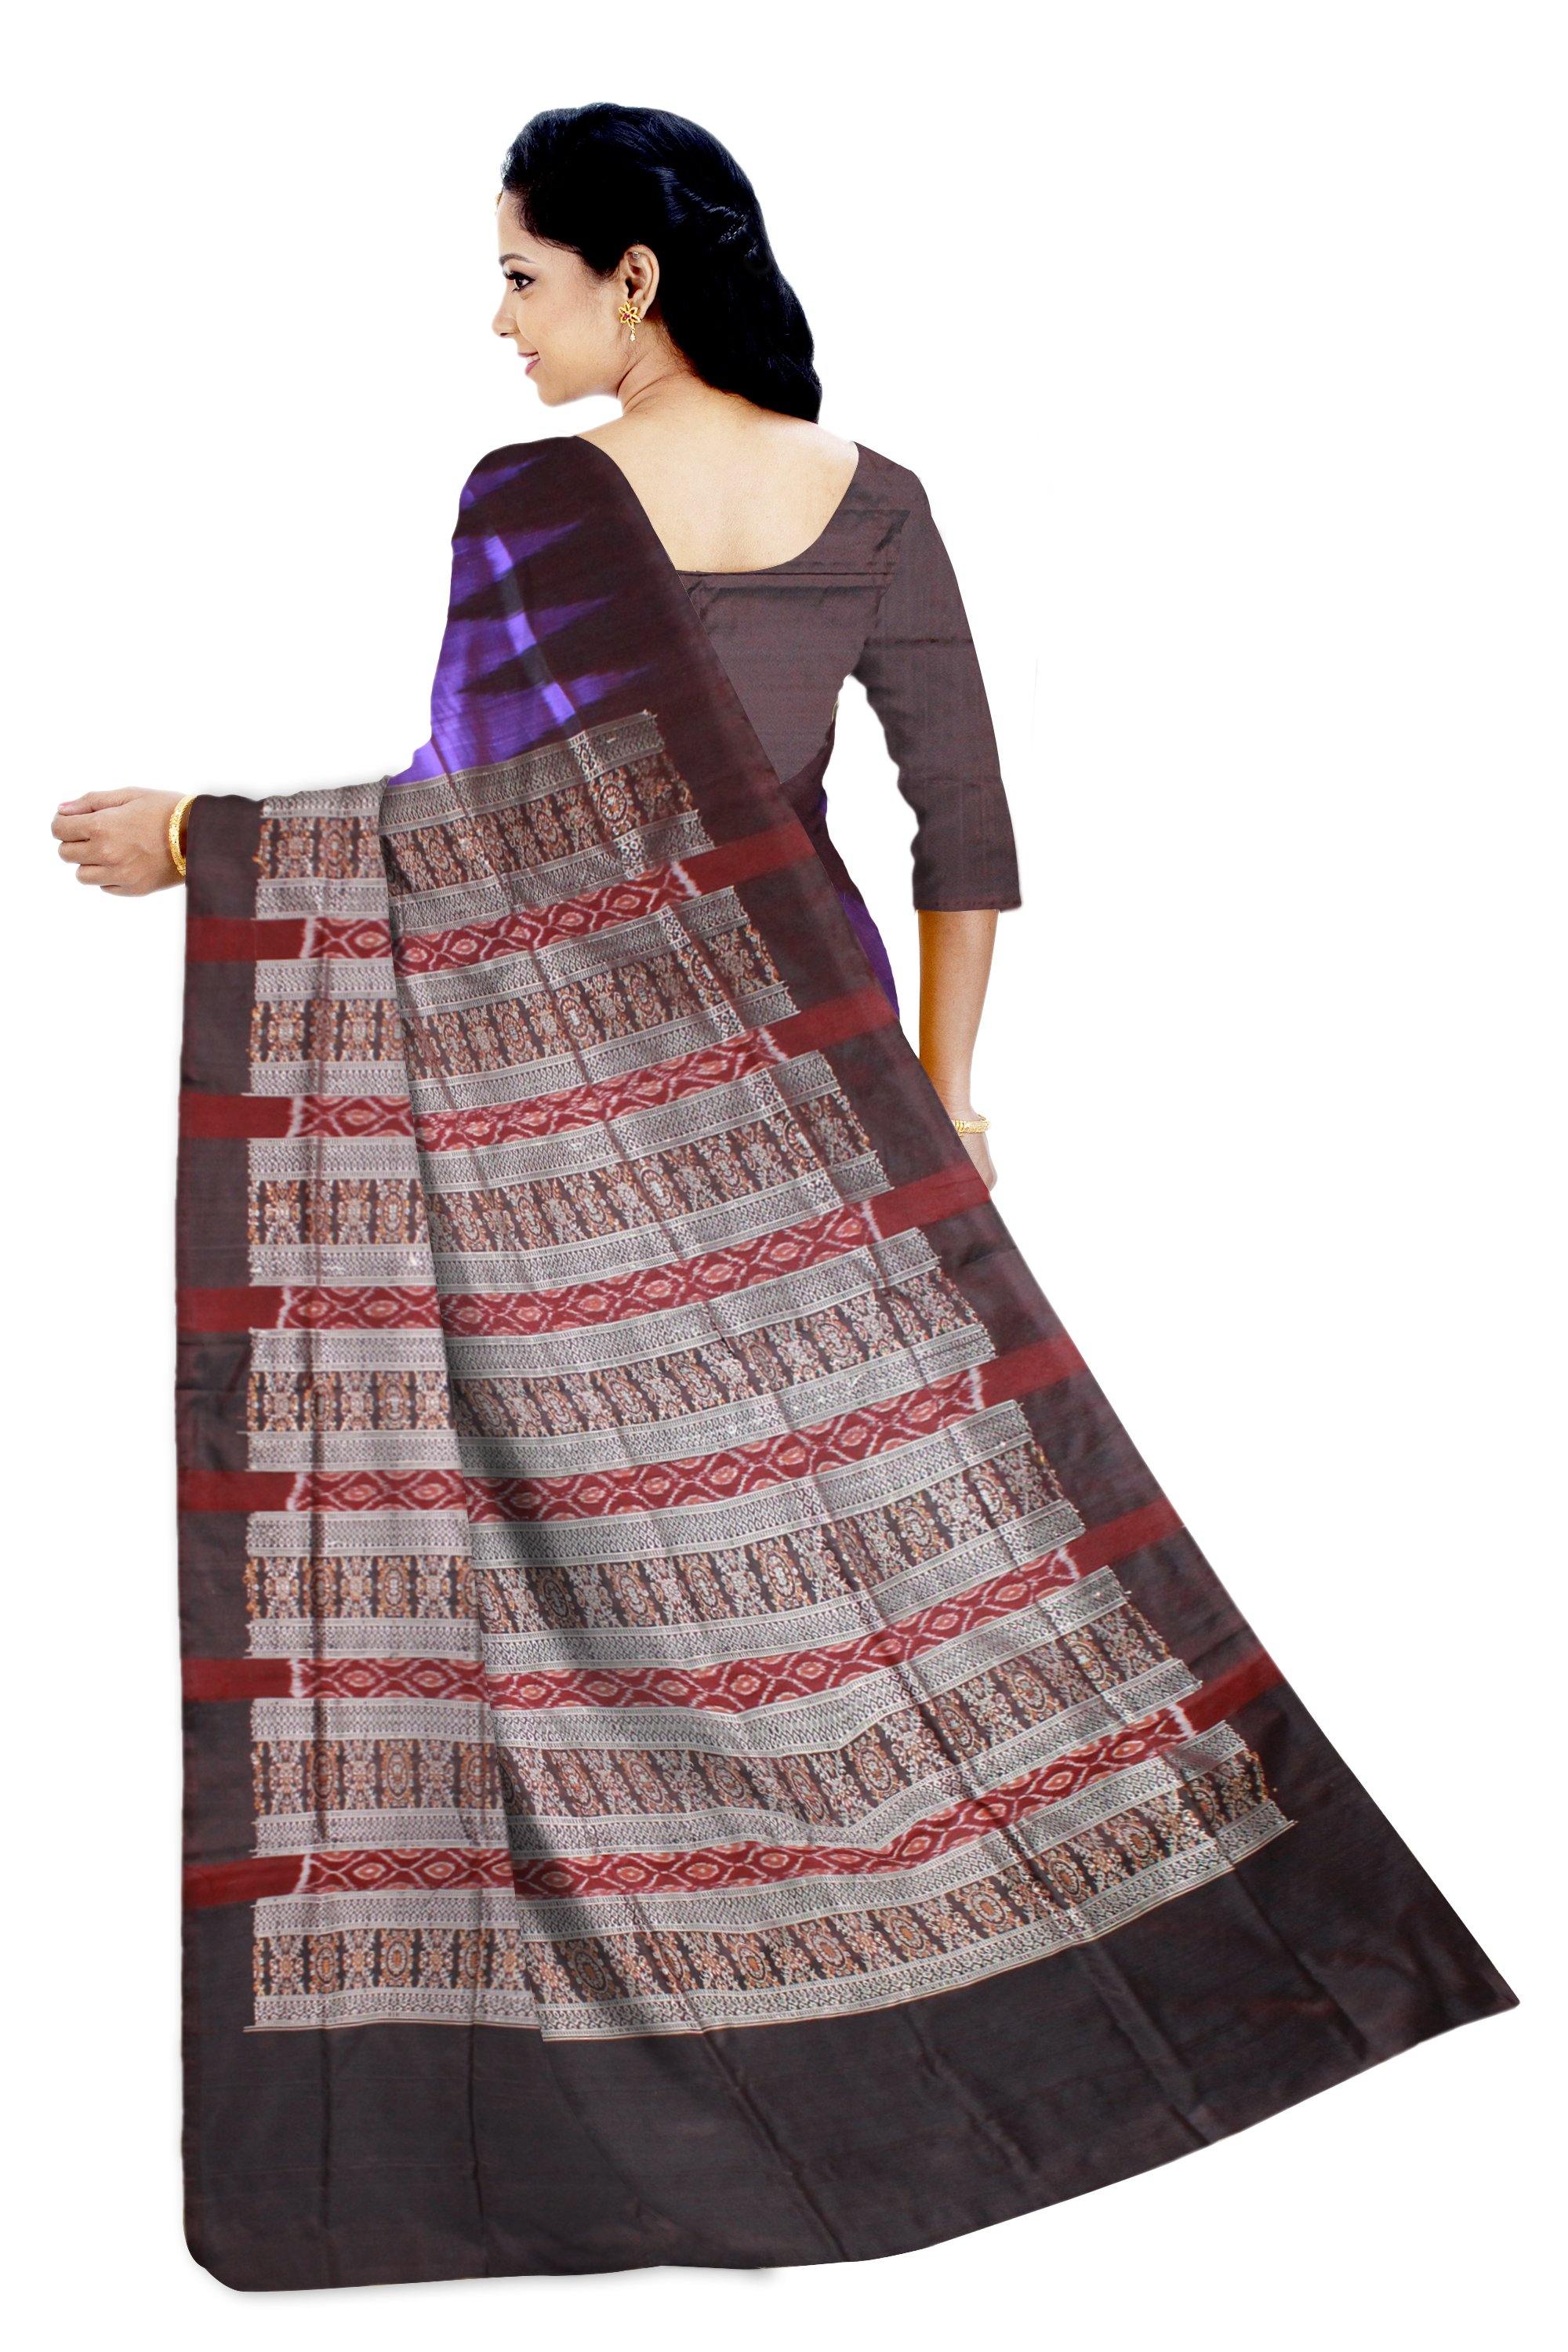 Violet color kargil pata saree with blouse piece. - Koshali Arts & Crafts Enterprise